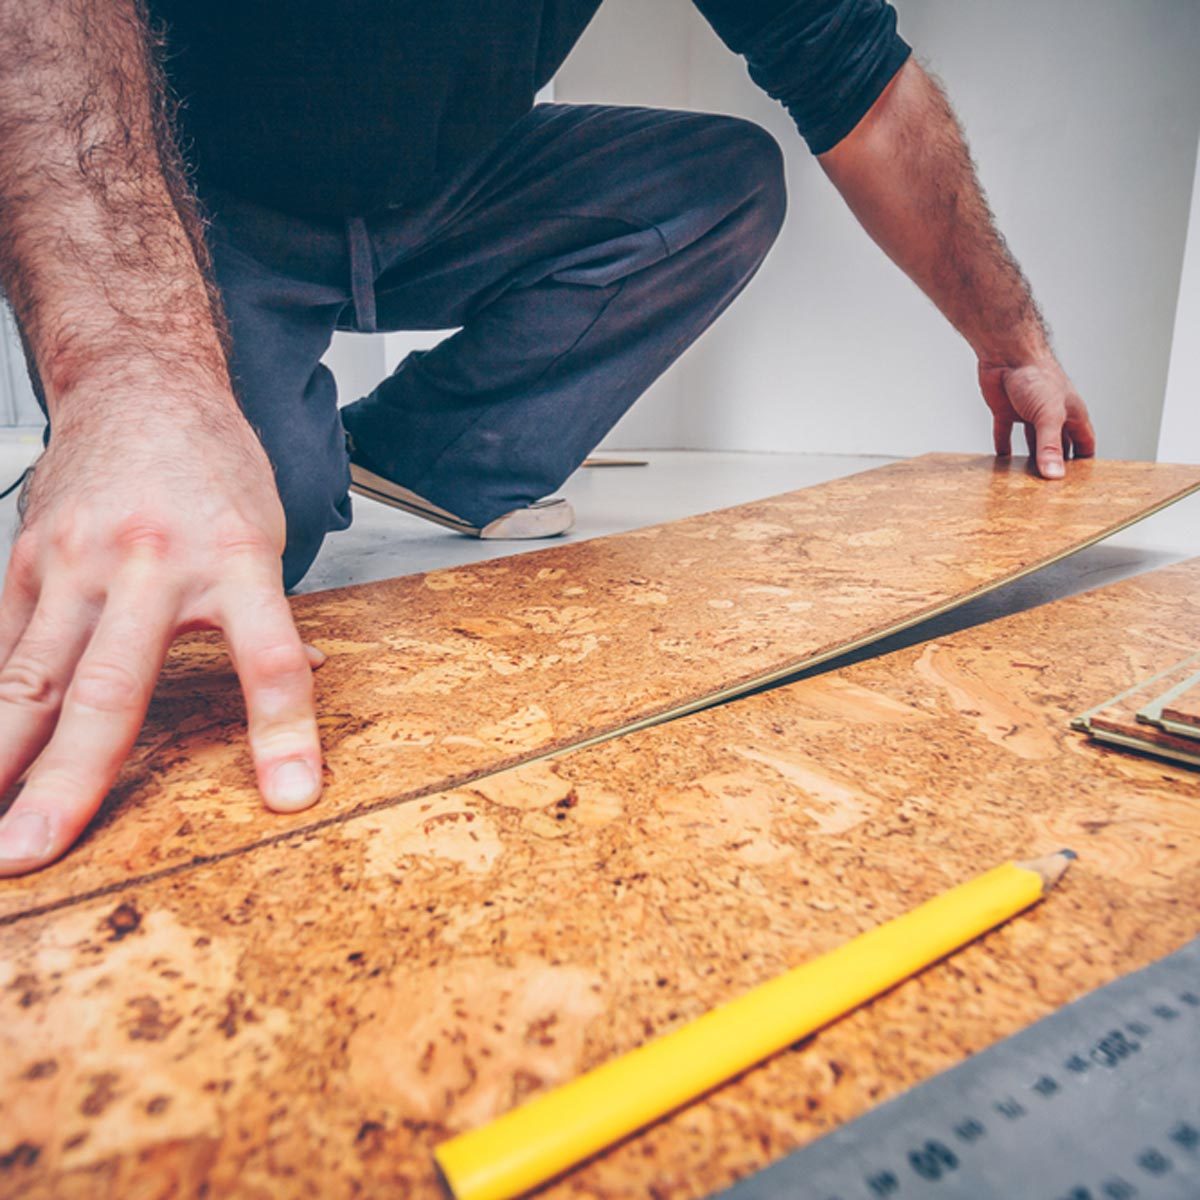 Outdoor Waterproof Rubber Flooring Mats: Versatile Use for DIY Home Projects